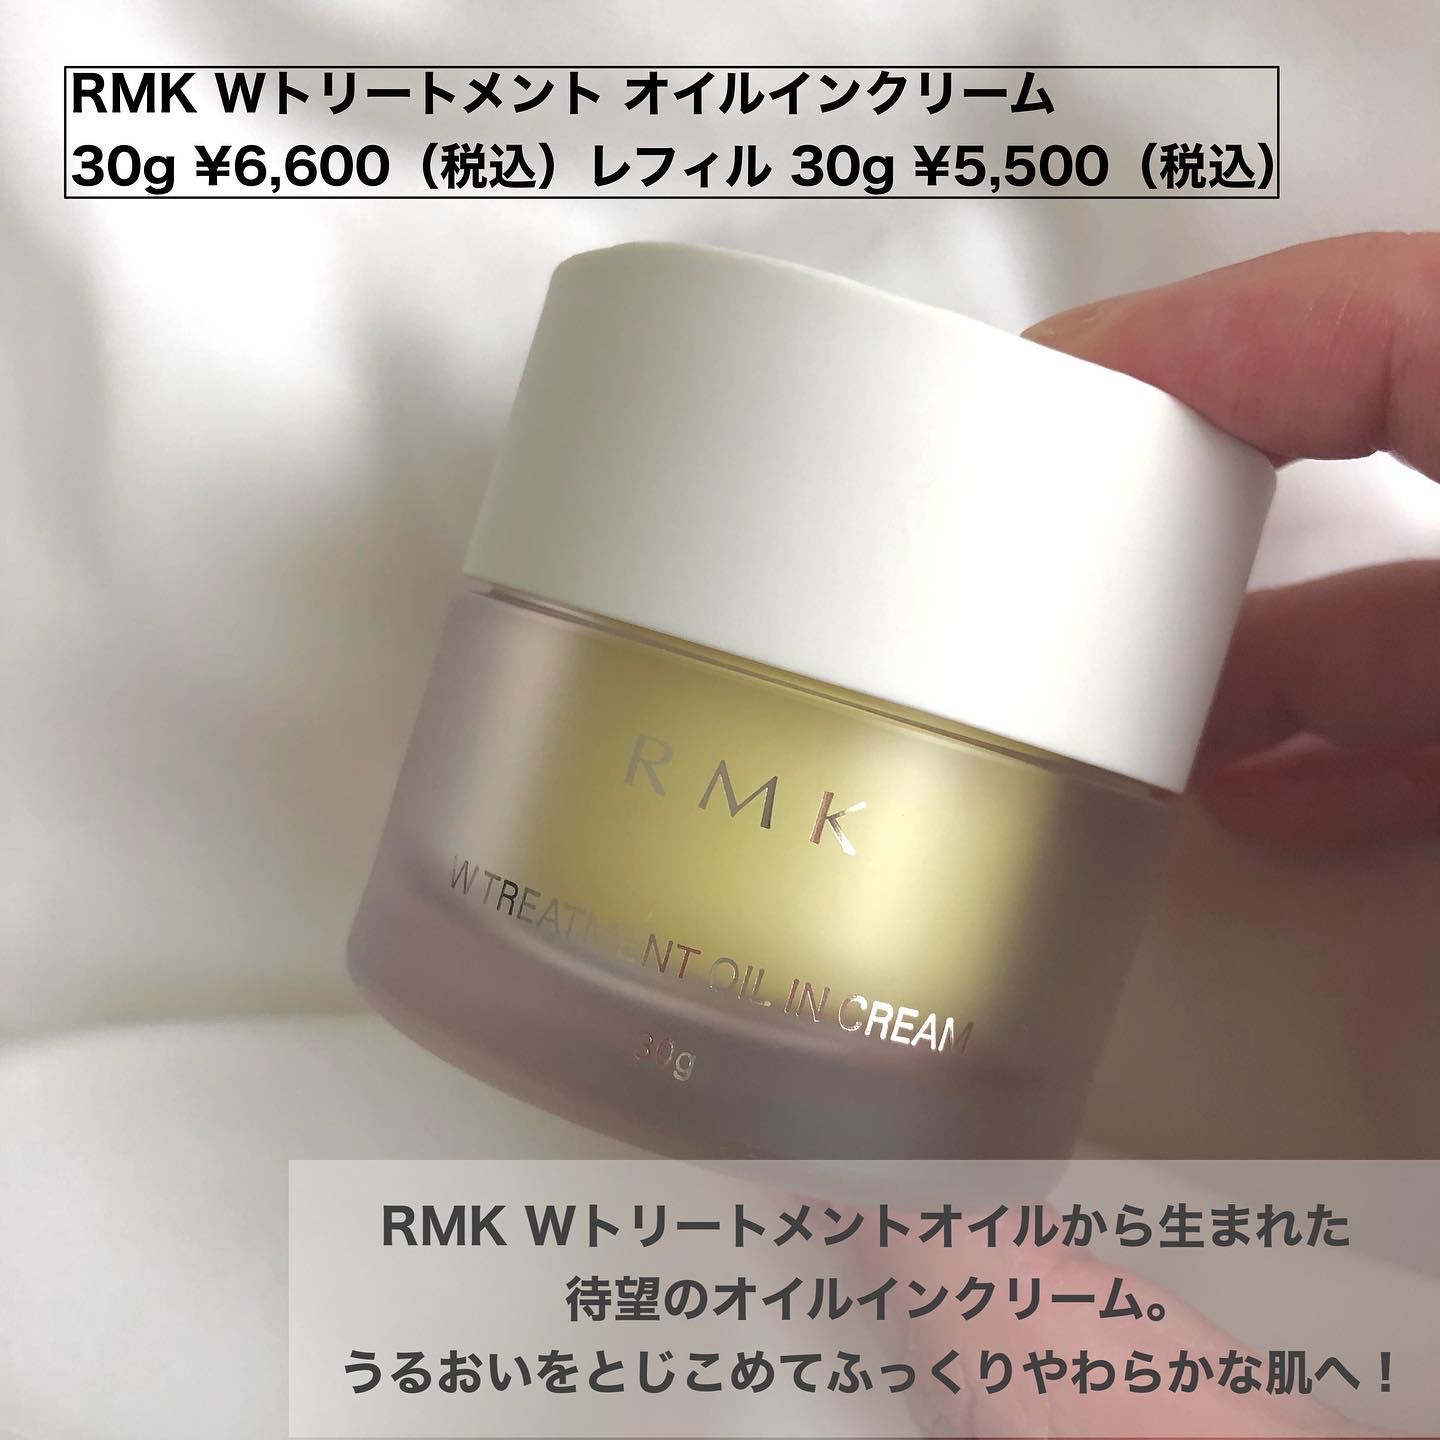 RMK W トリートメント オイル 50ml - 基礎化粧品